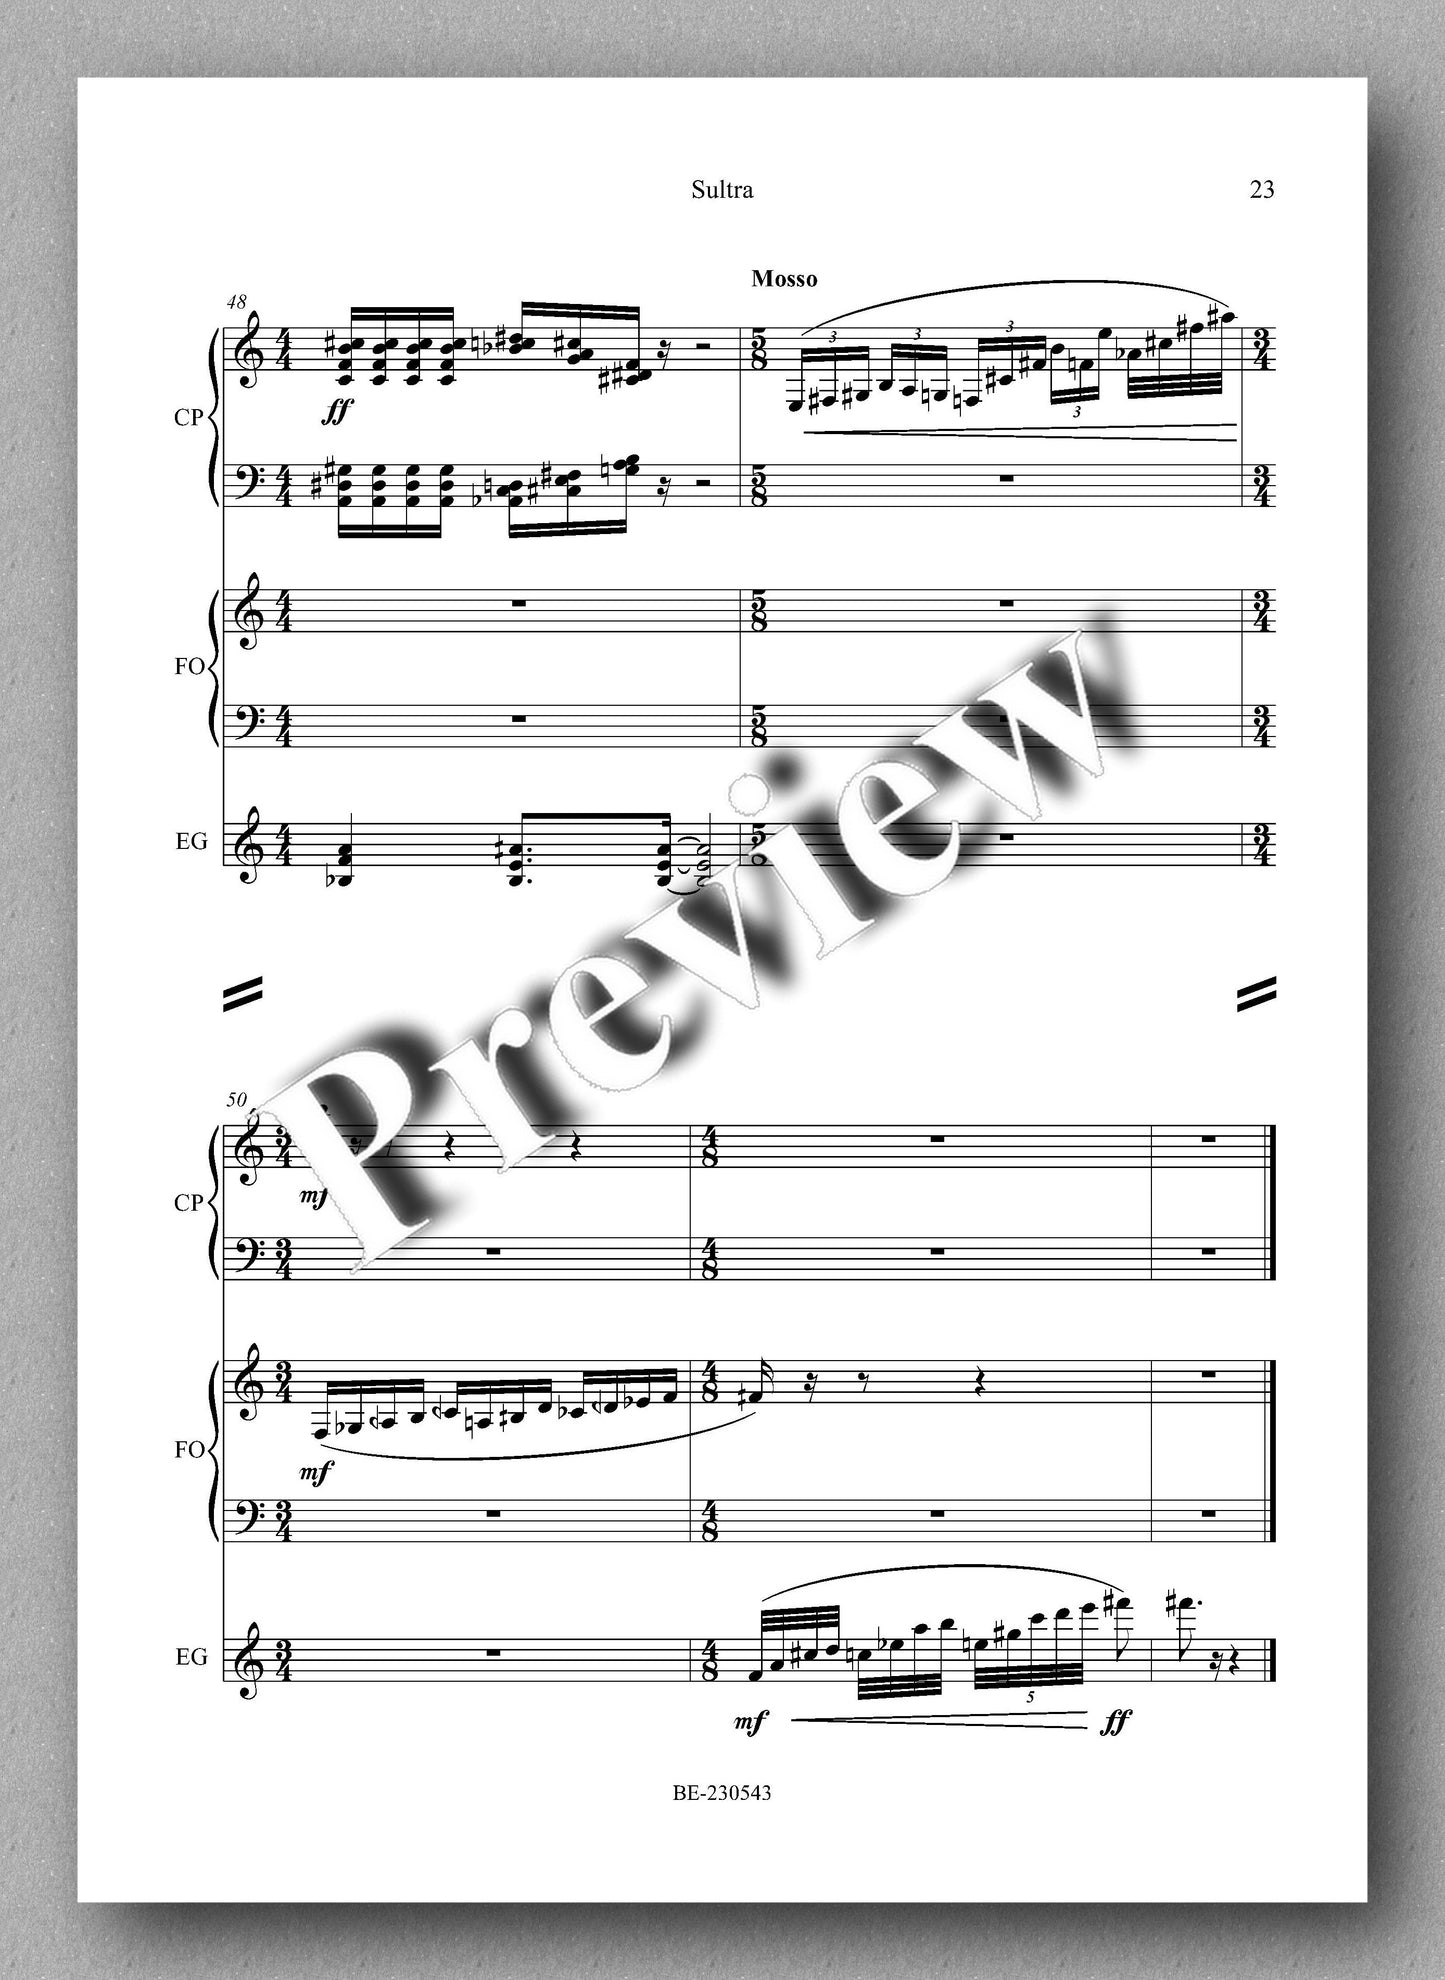 Nicolà Visalì, SUTRA - preview of the music score 3